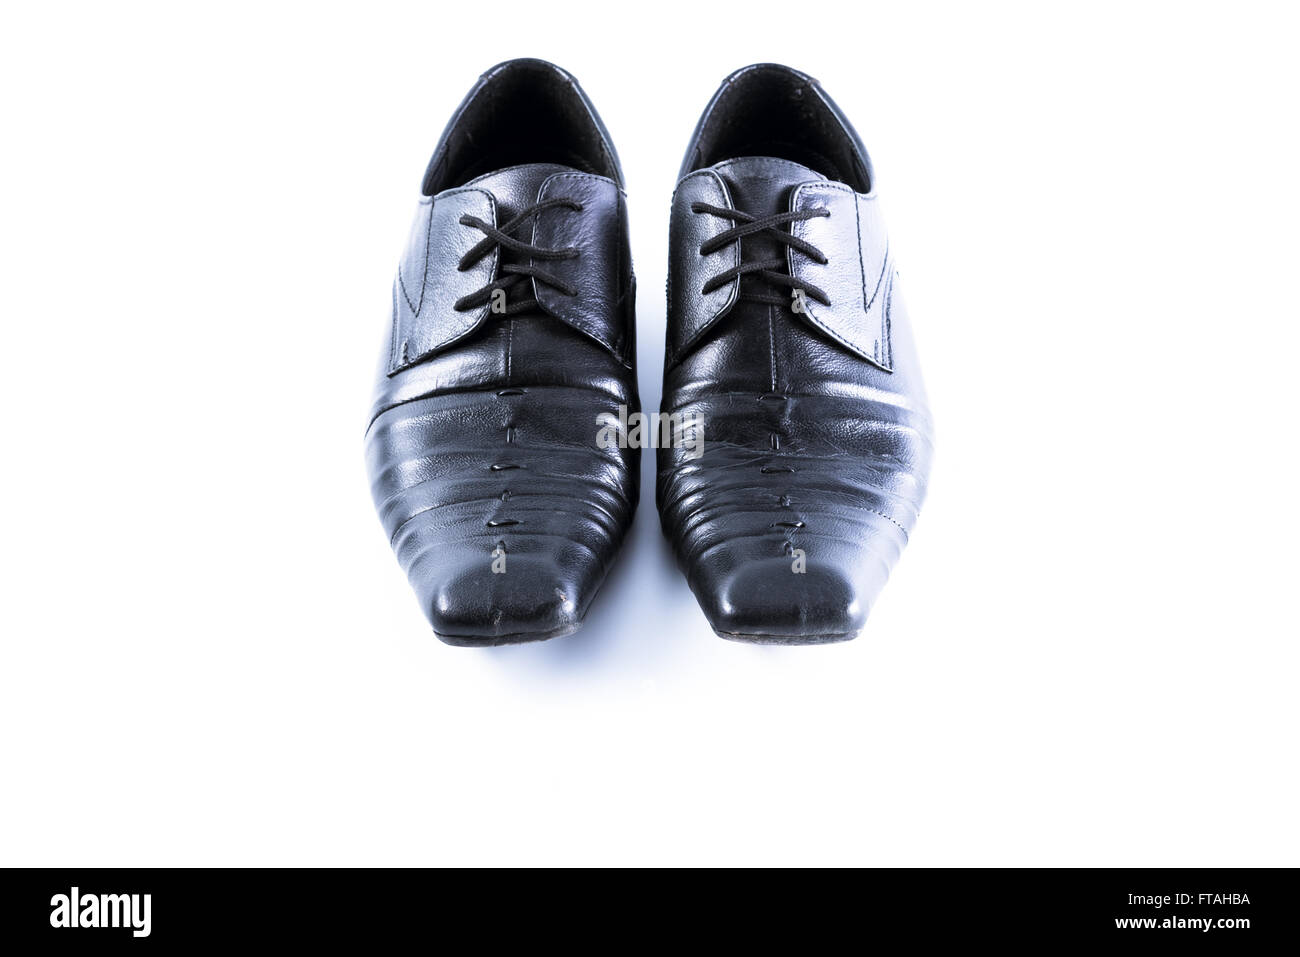 Used men shoes on white background Stock Photo - Alamy